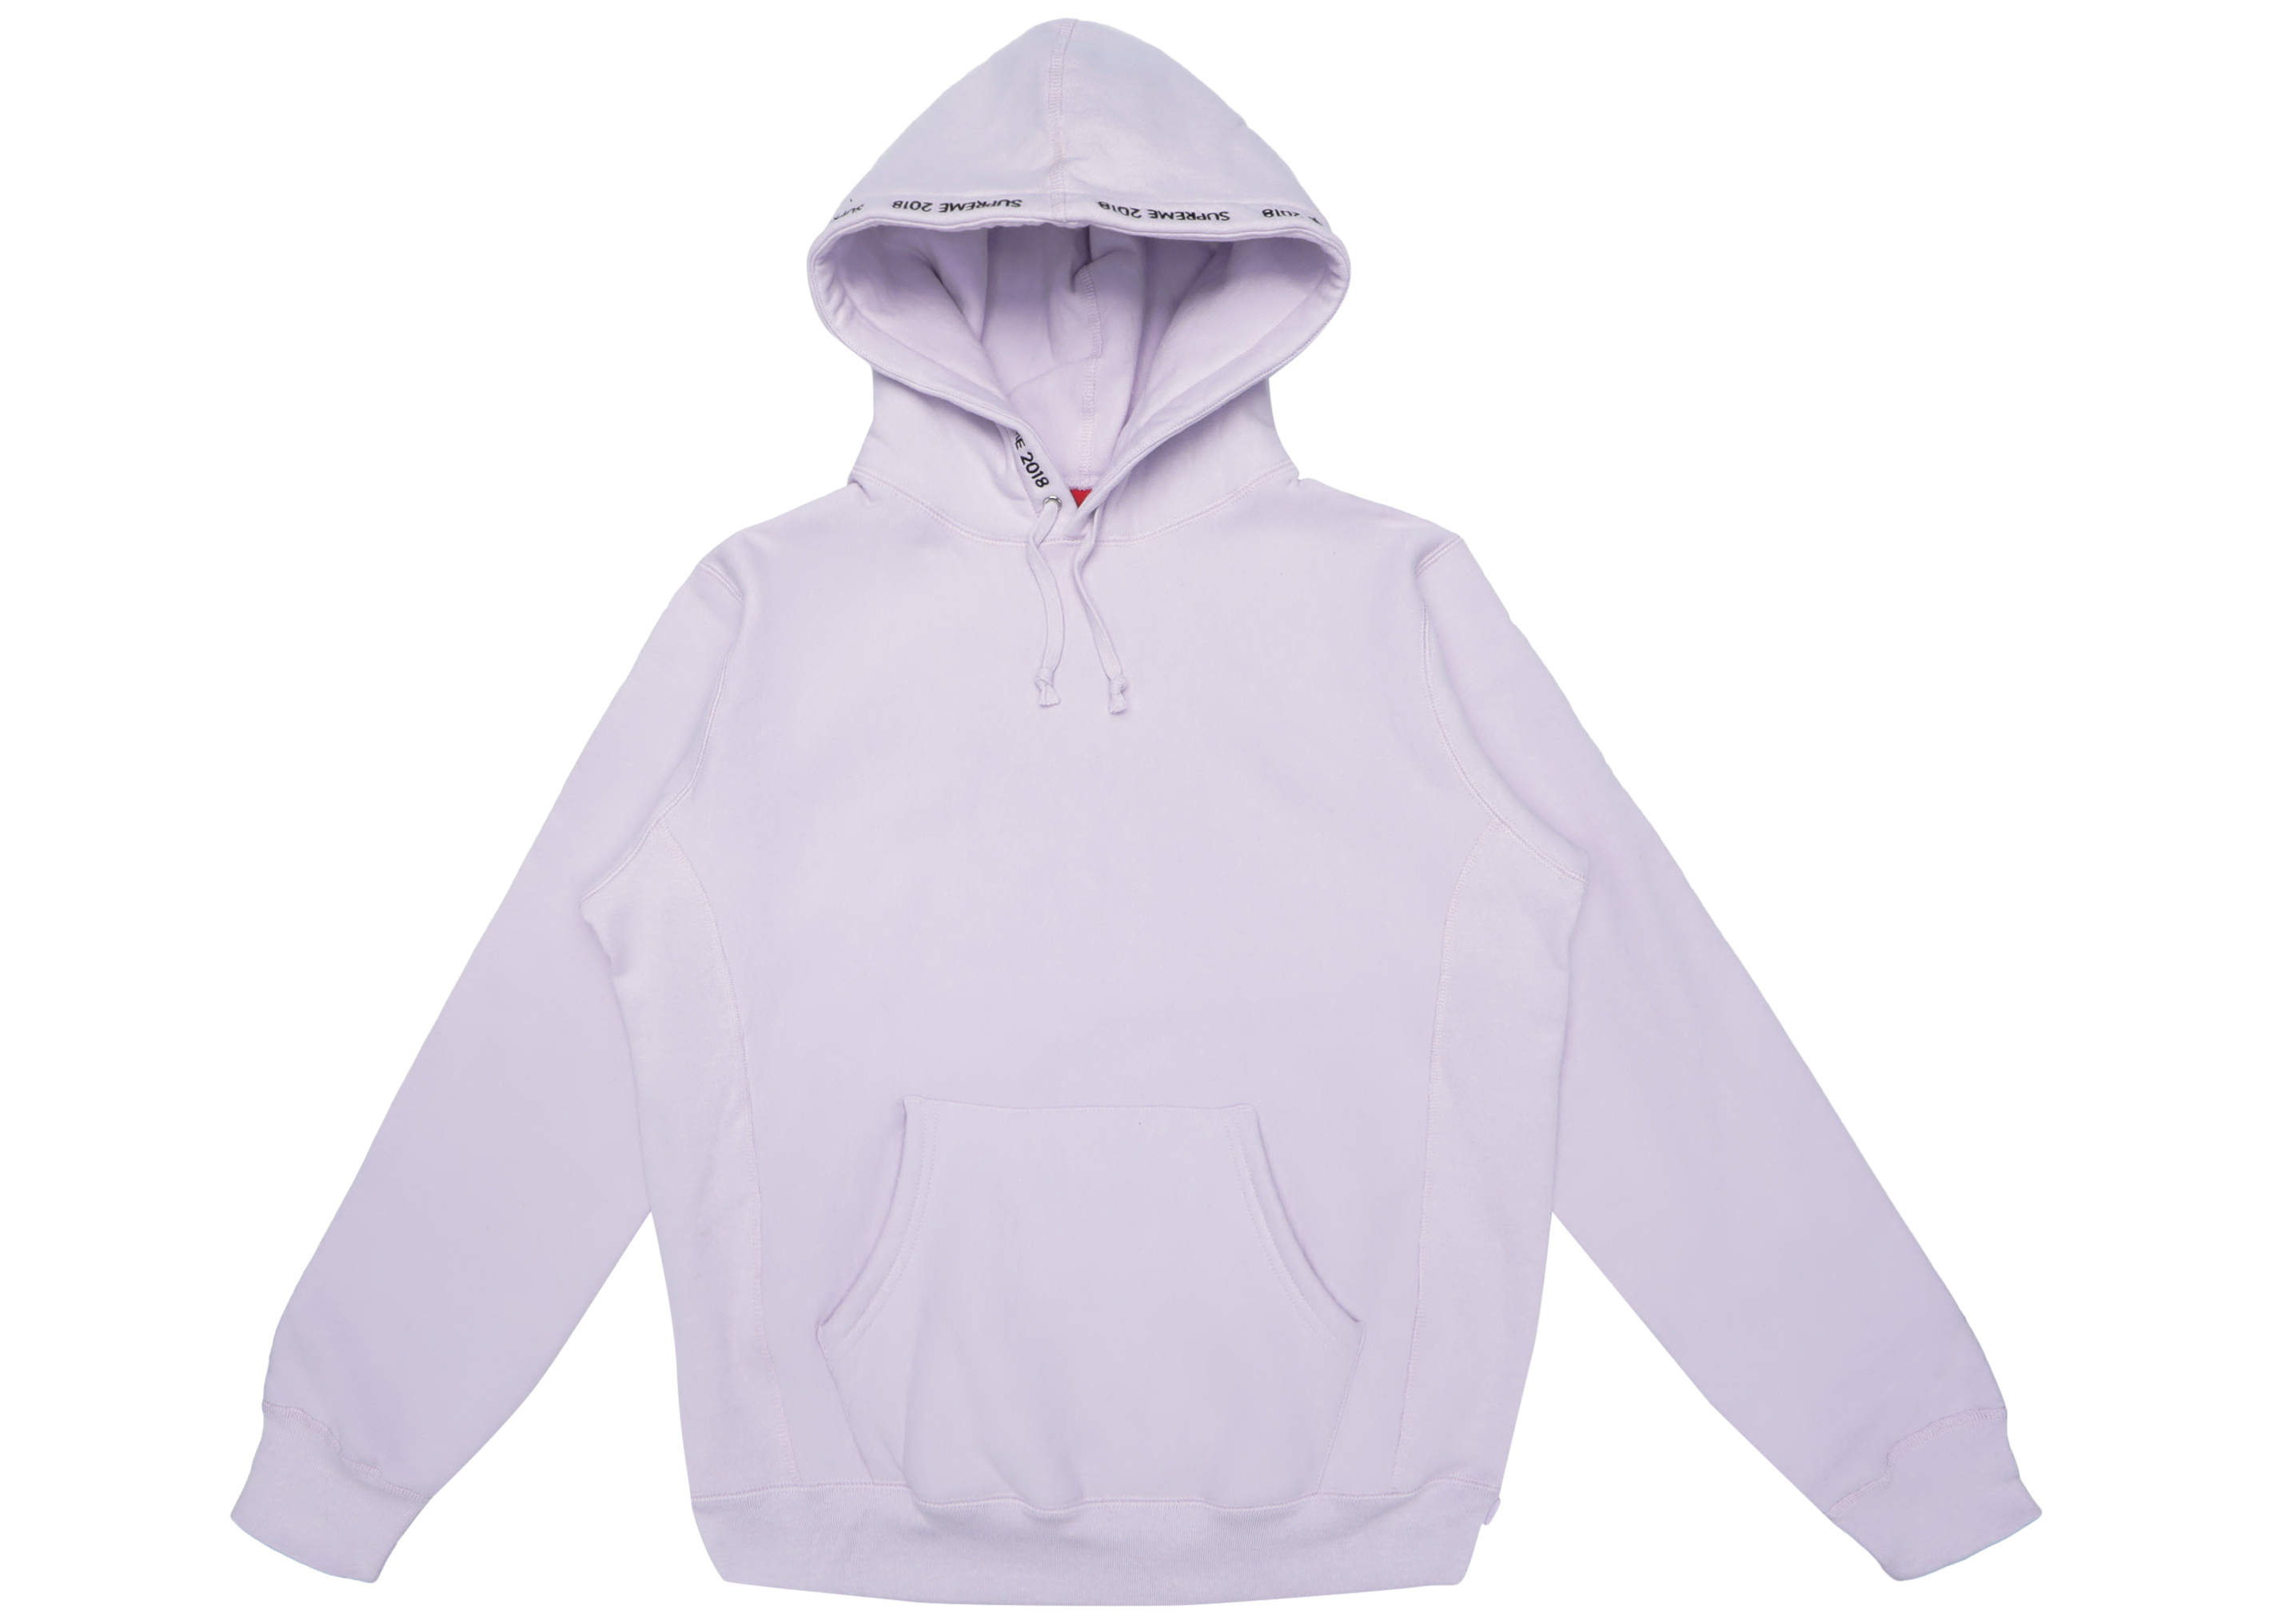 Supreme Channel Hooded Sweatshirt Light Purple